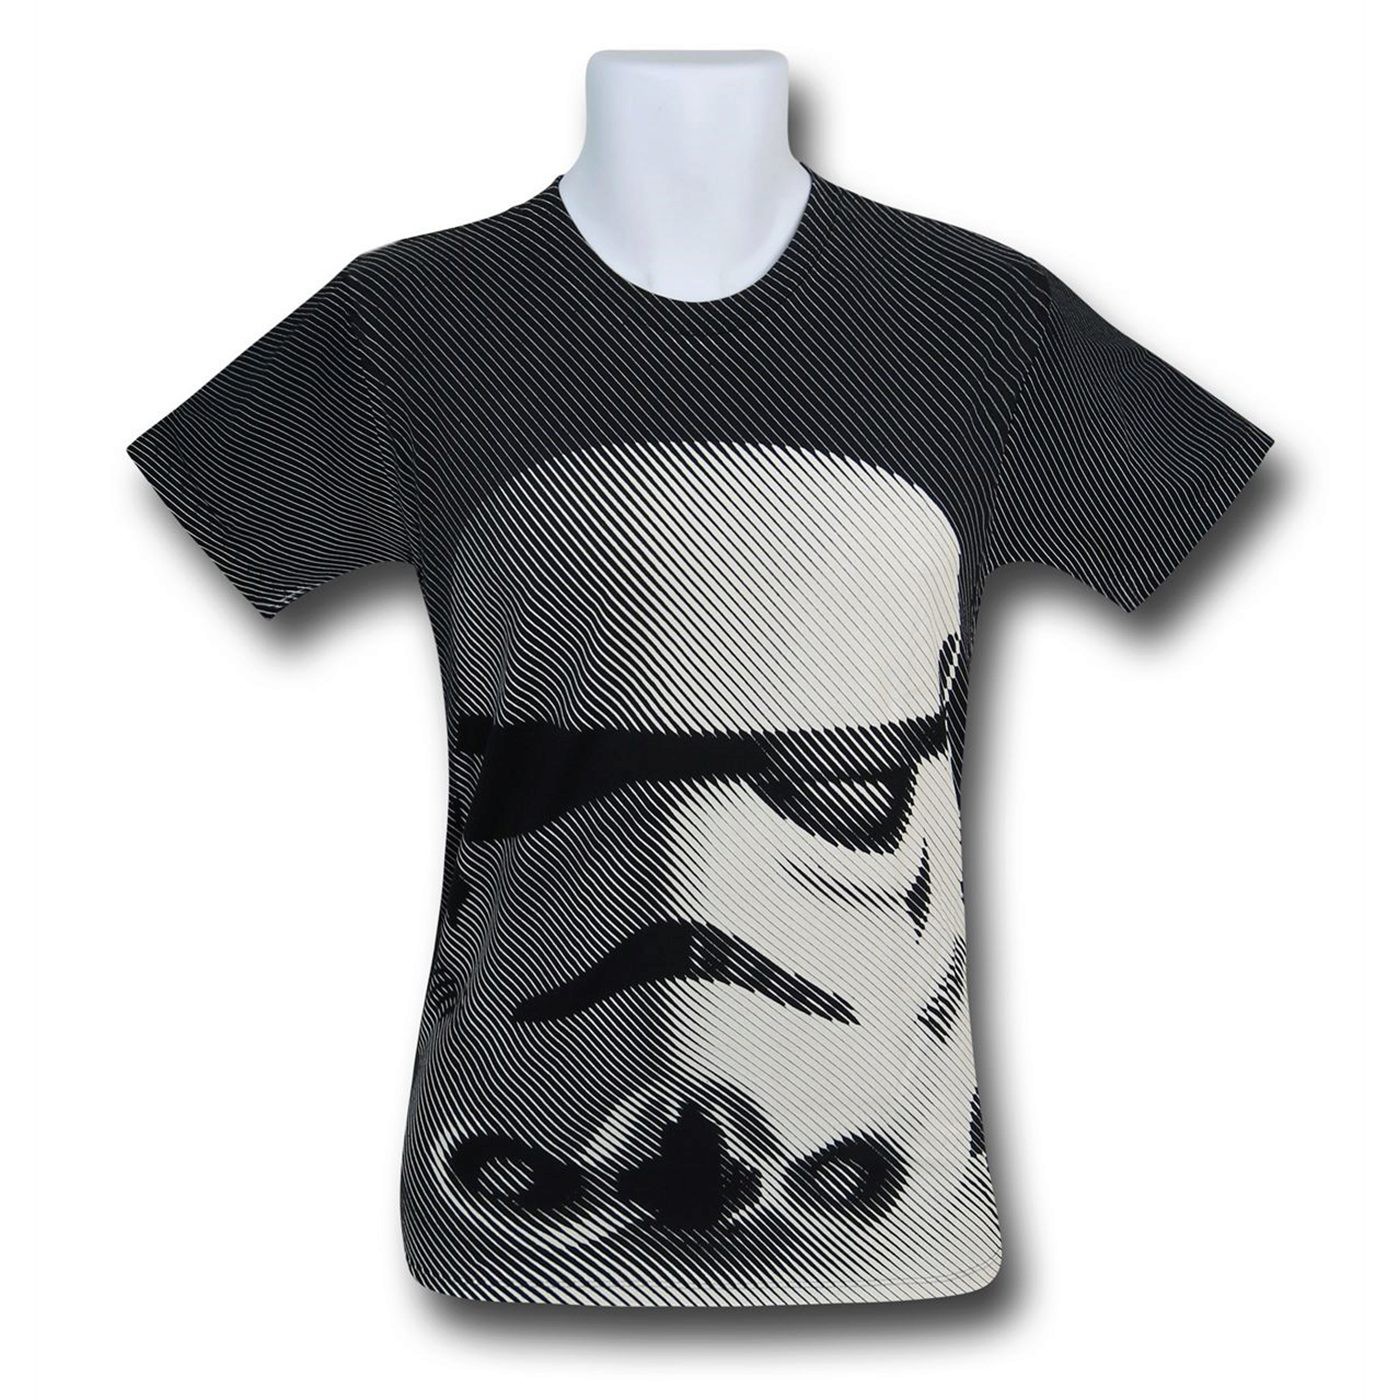 Star Wars Stormtrooper All-Over Print Men's T-Shirt